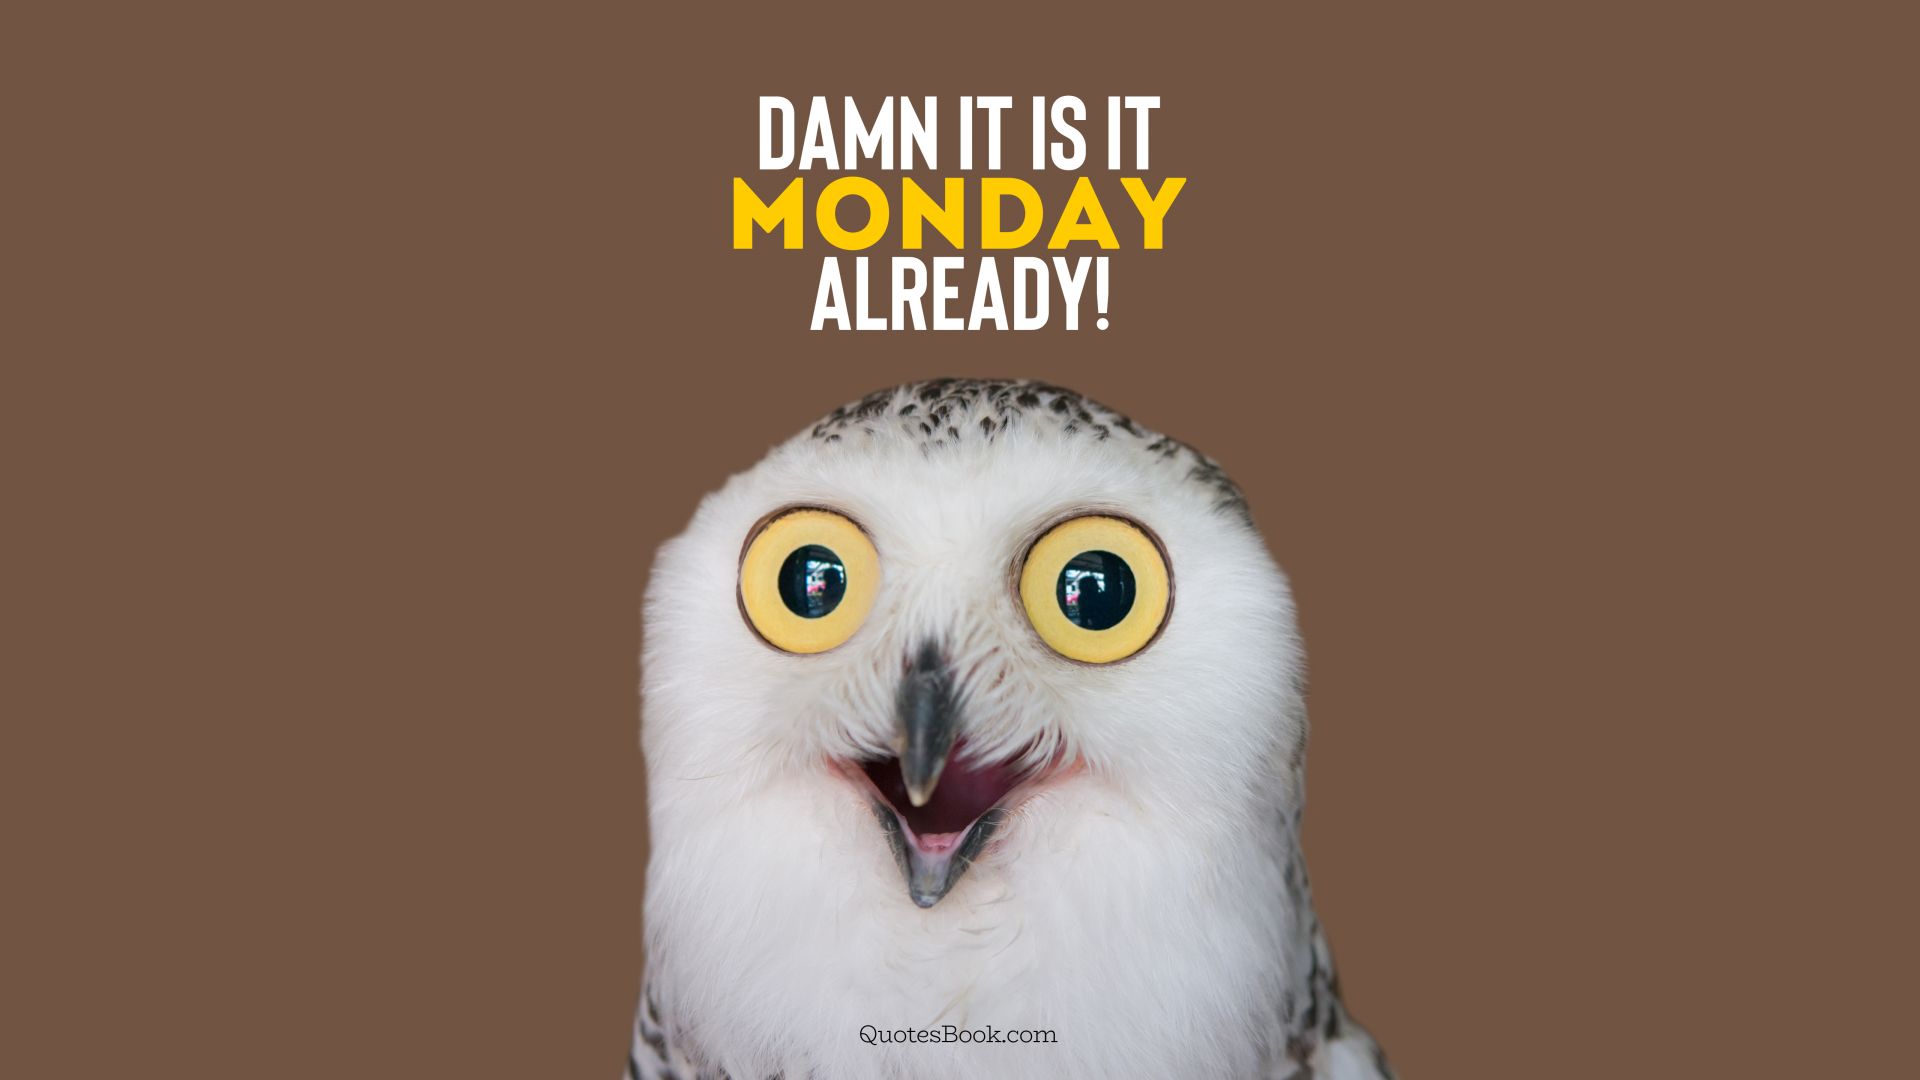 Damn it’s Monday already!